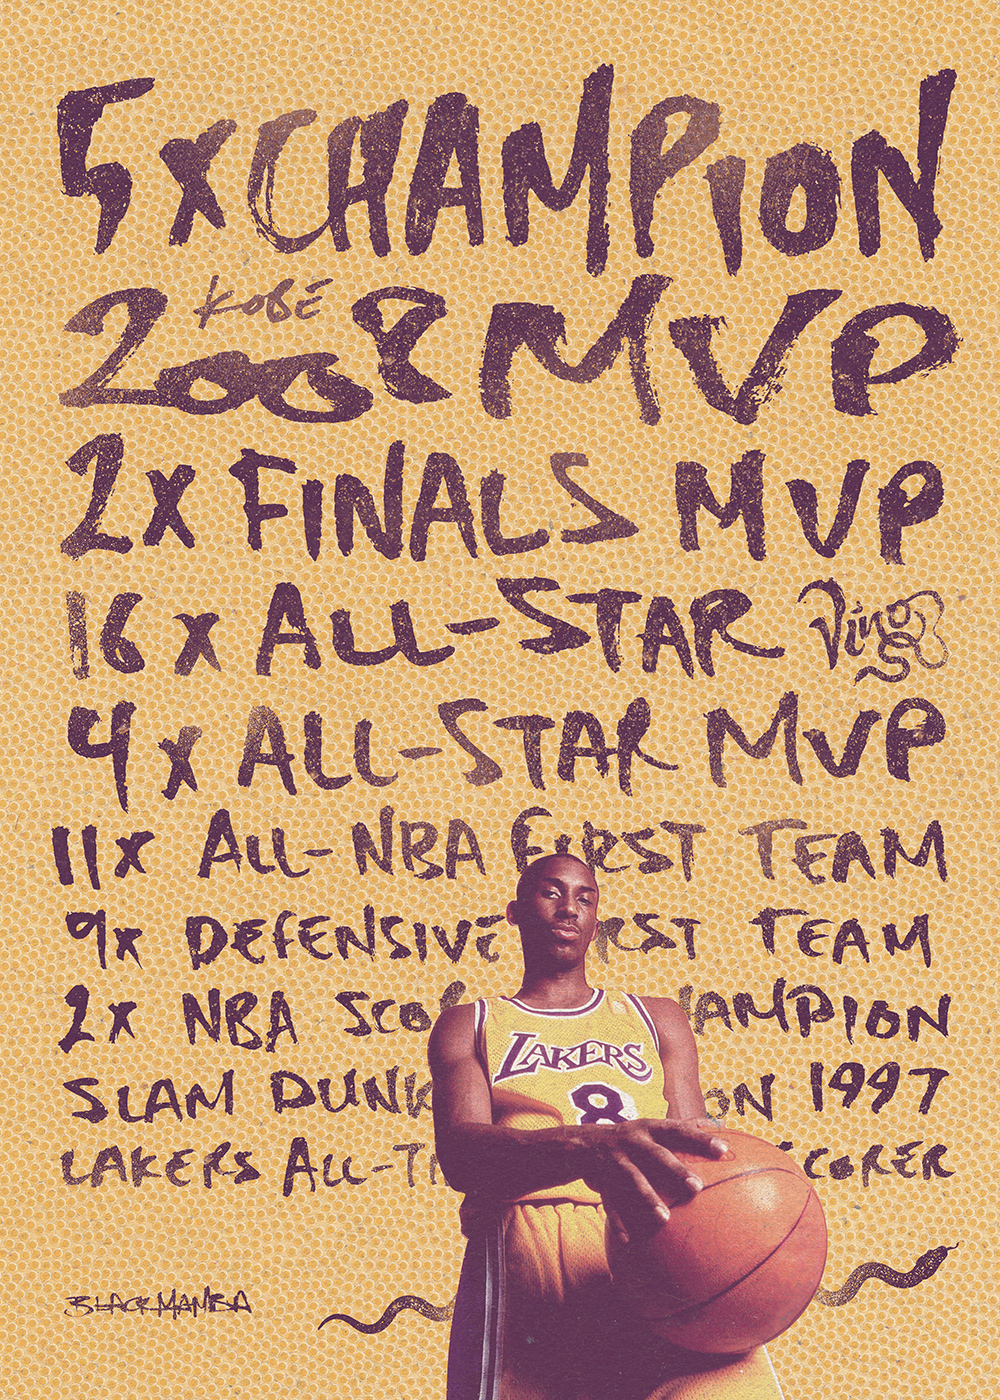 NBA Allen Iverson Kobe Bryant gary payton Michael Jordan Charles Barkley cards posters basketball Archives grant hill Penny Hardaway  sports